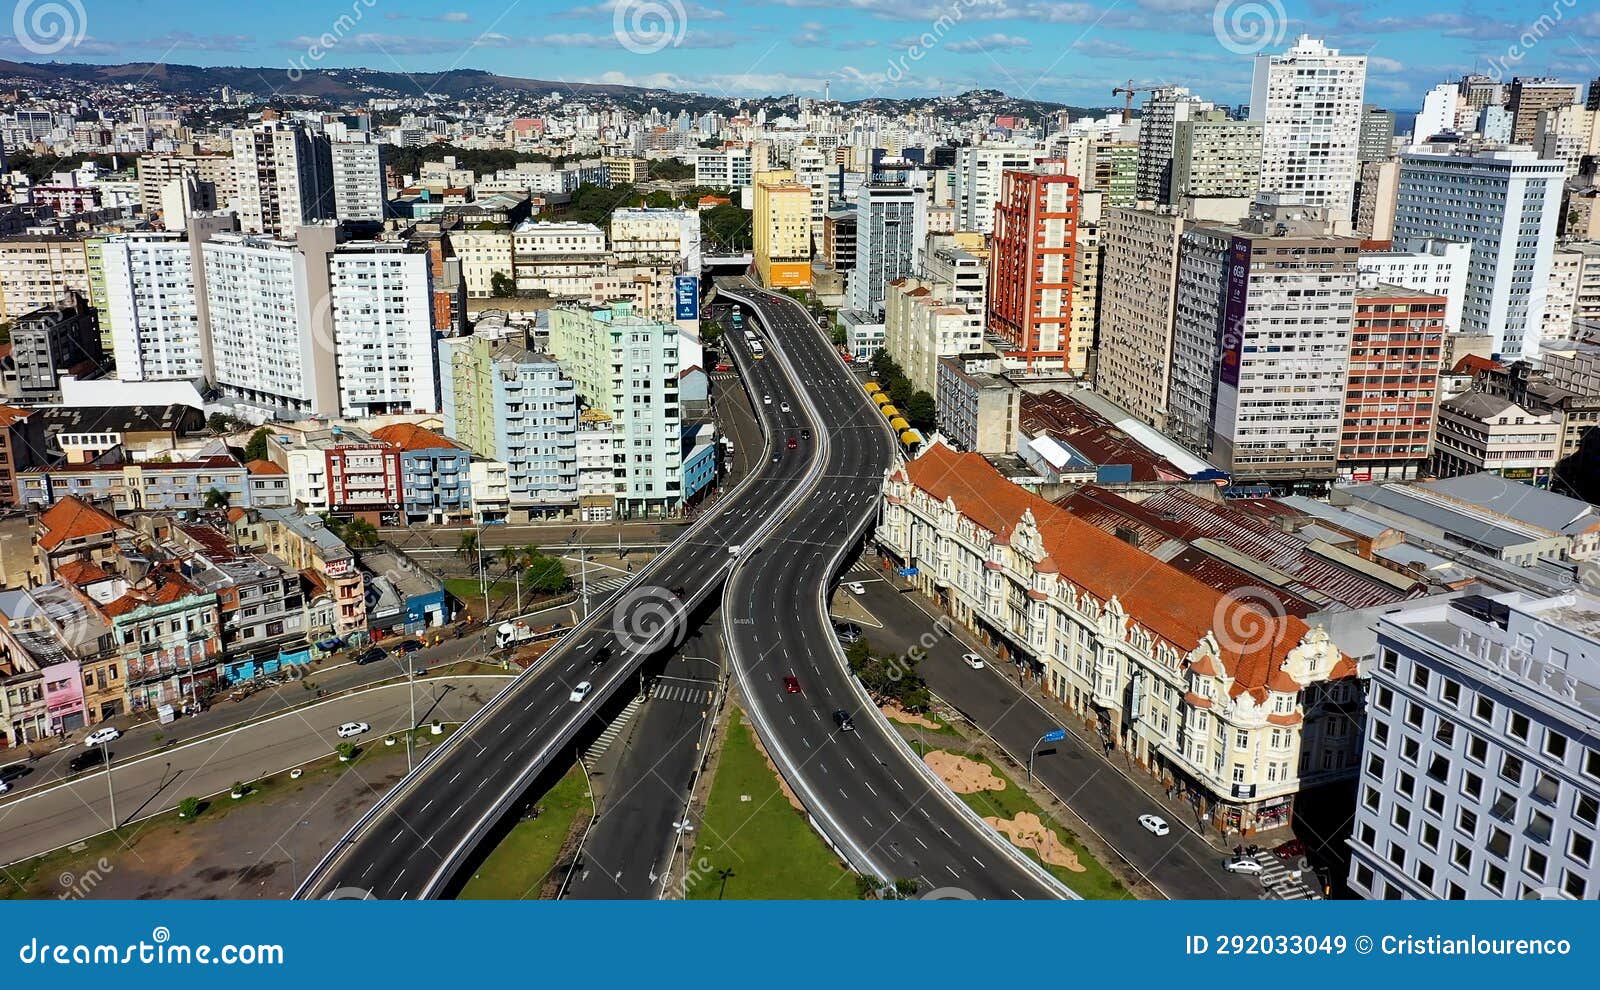 126 Porto Alegre Skyline Stock Photos - Free & Royalty-Free Stock Photos  from Dreamstime